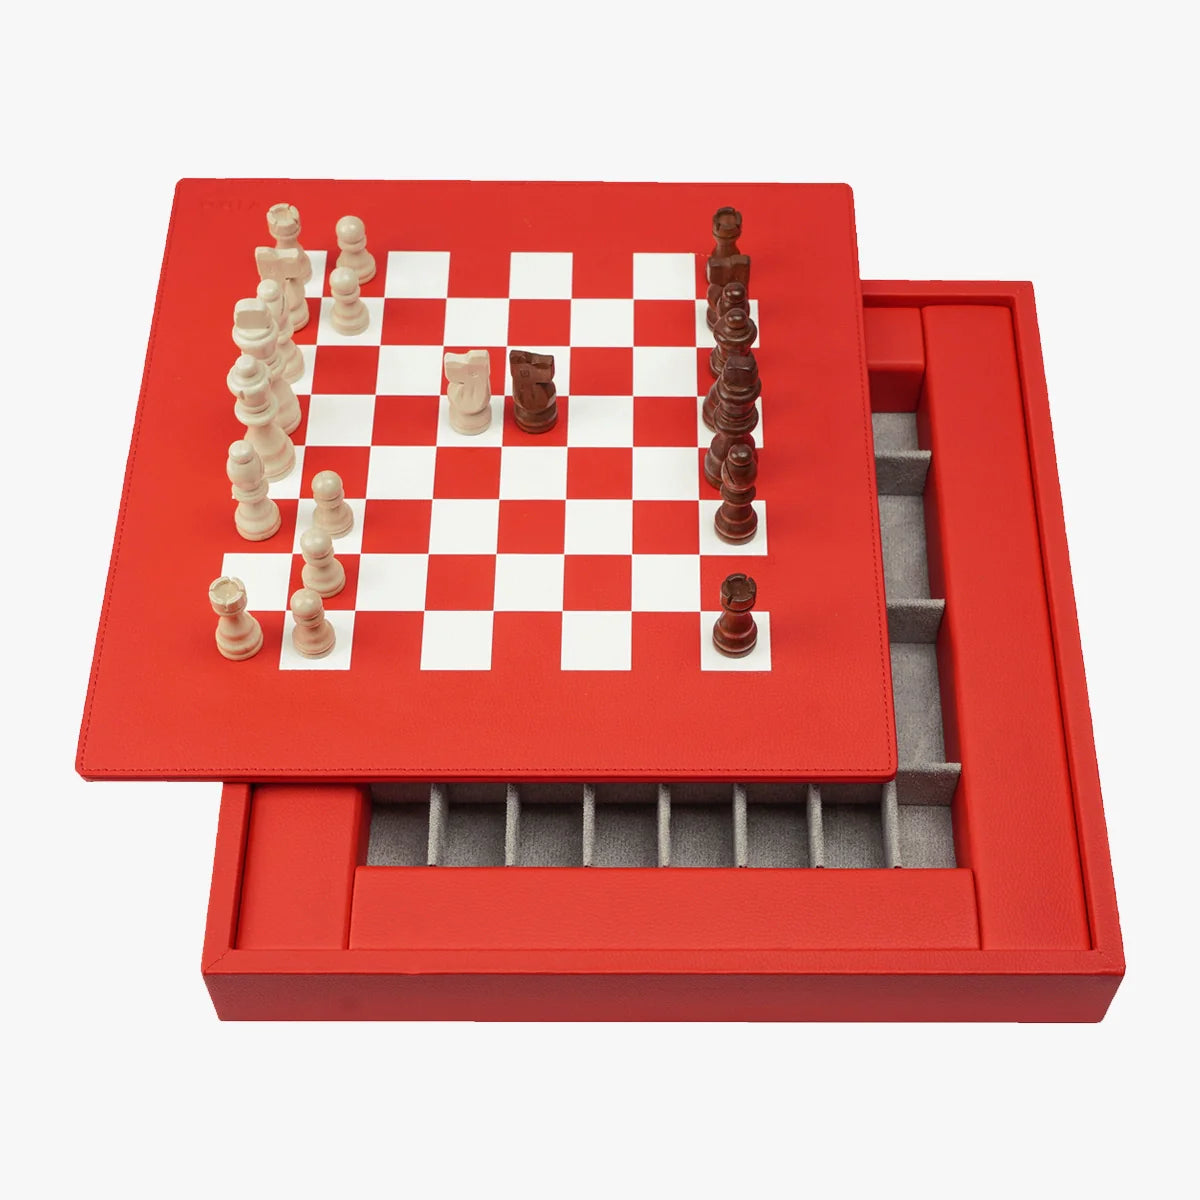 VIDO Luxury Chess Box Red Vegan Leather